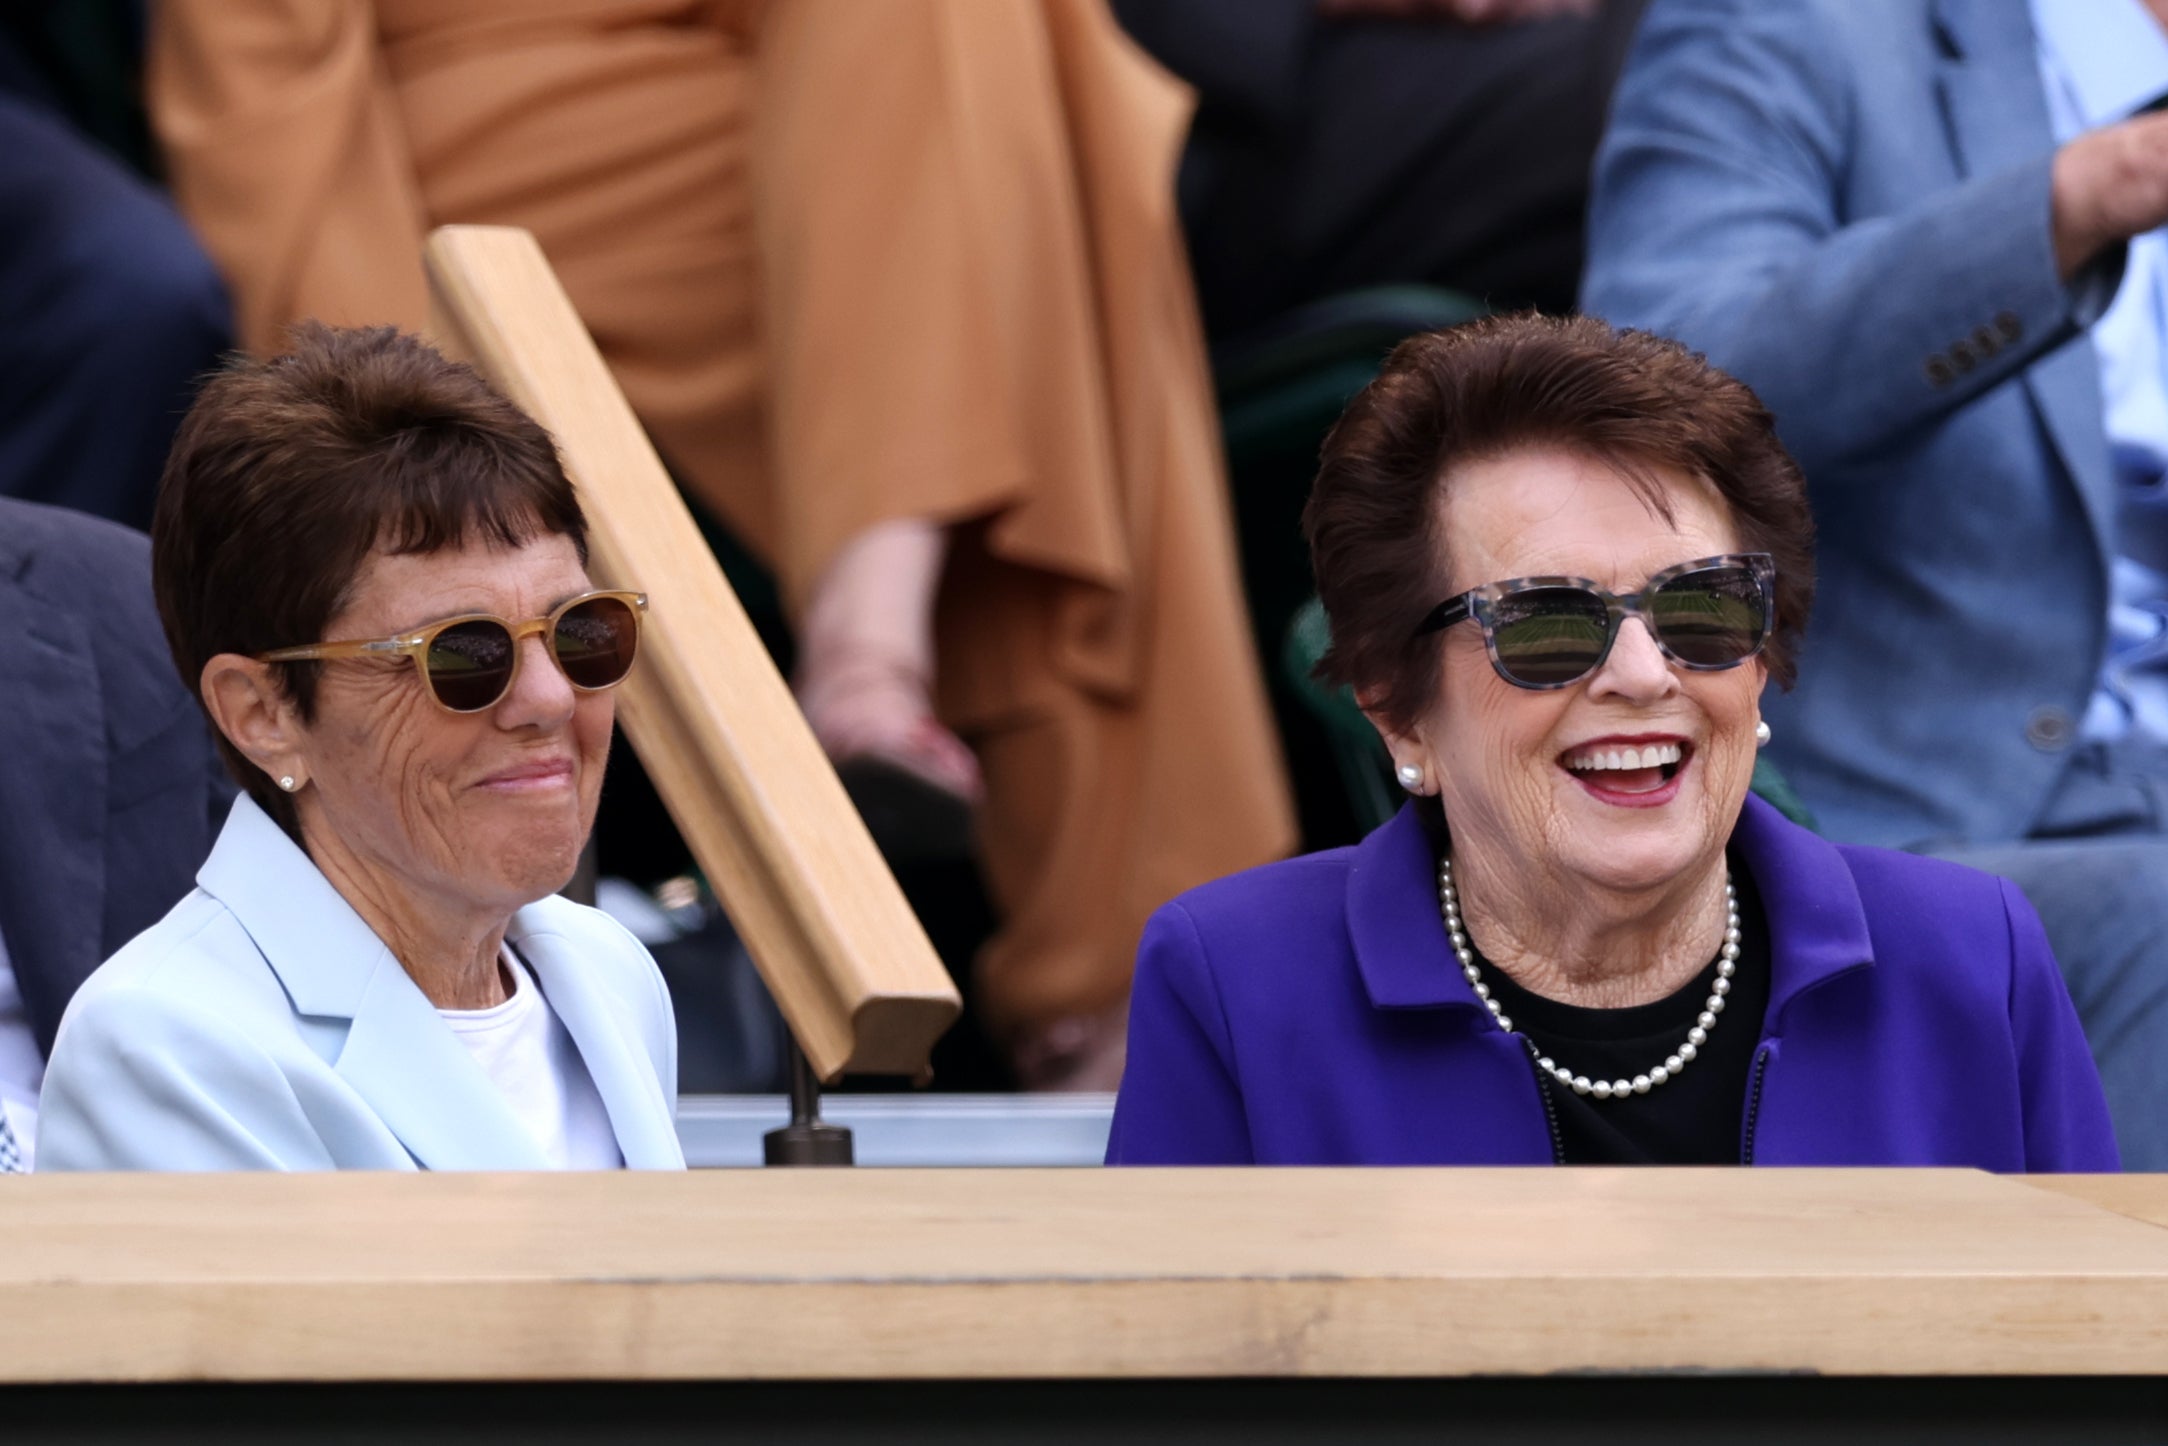 Ilana Kloss and Billie Jean King at Wimbledon